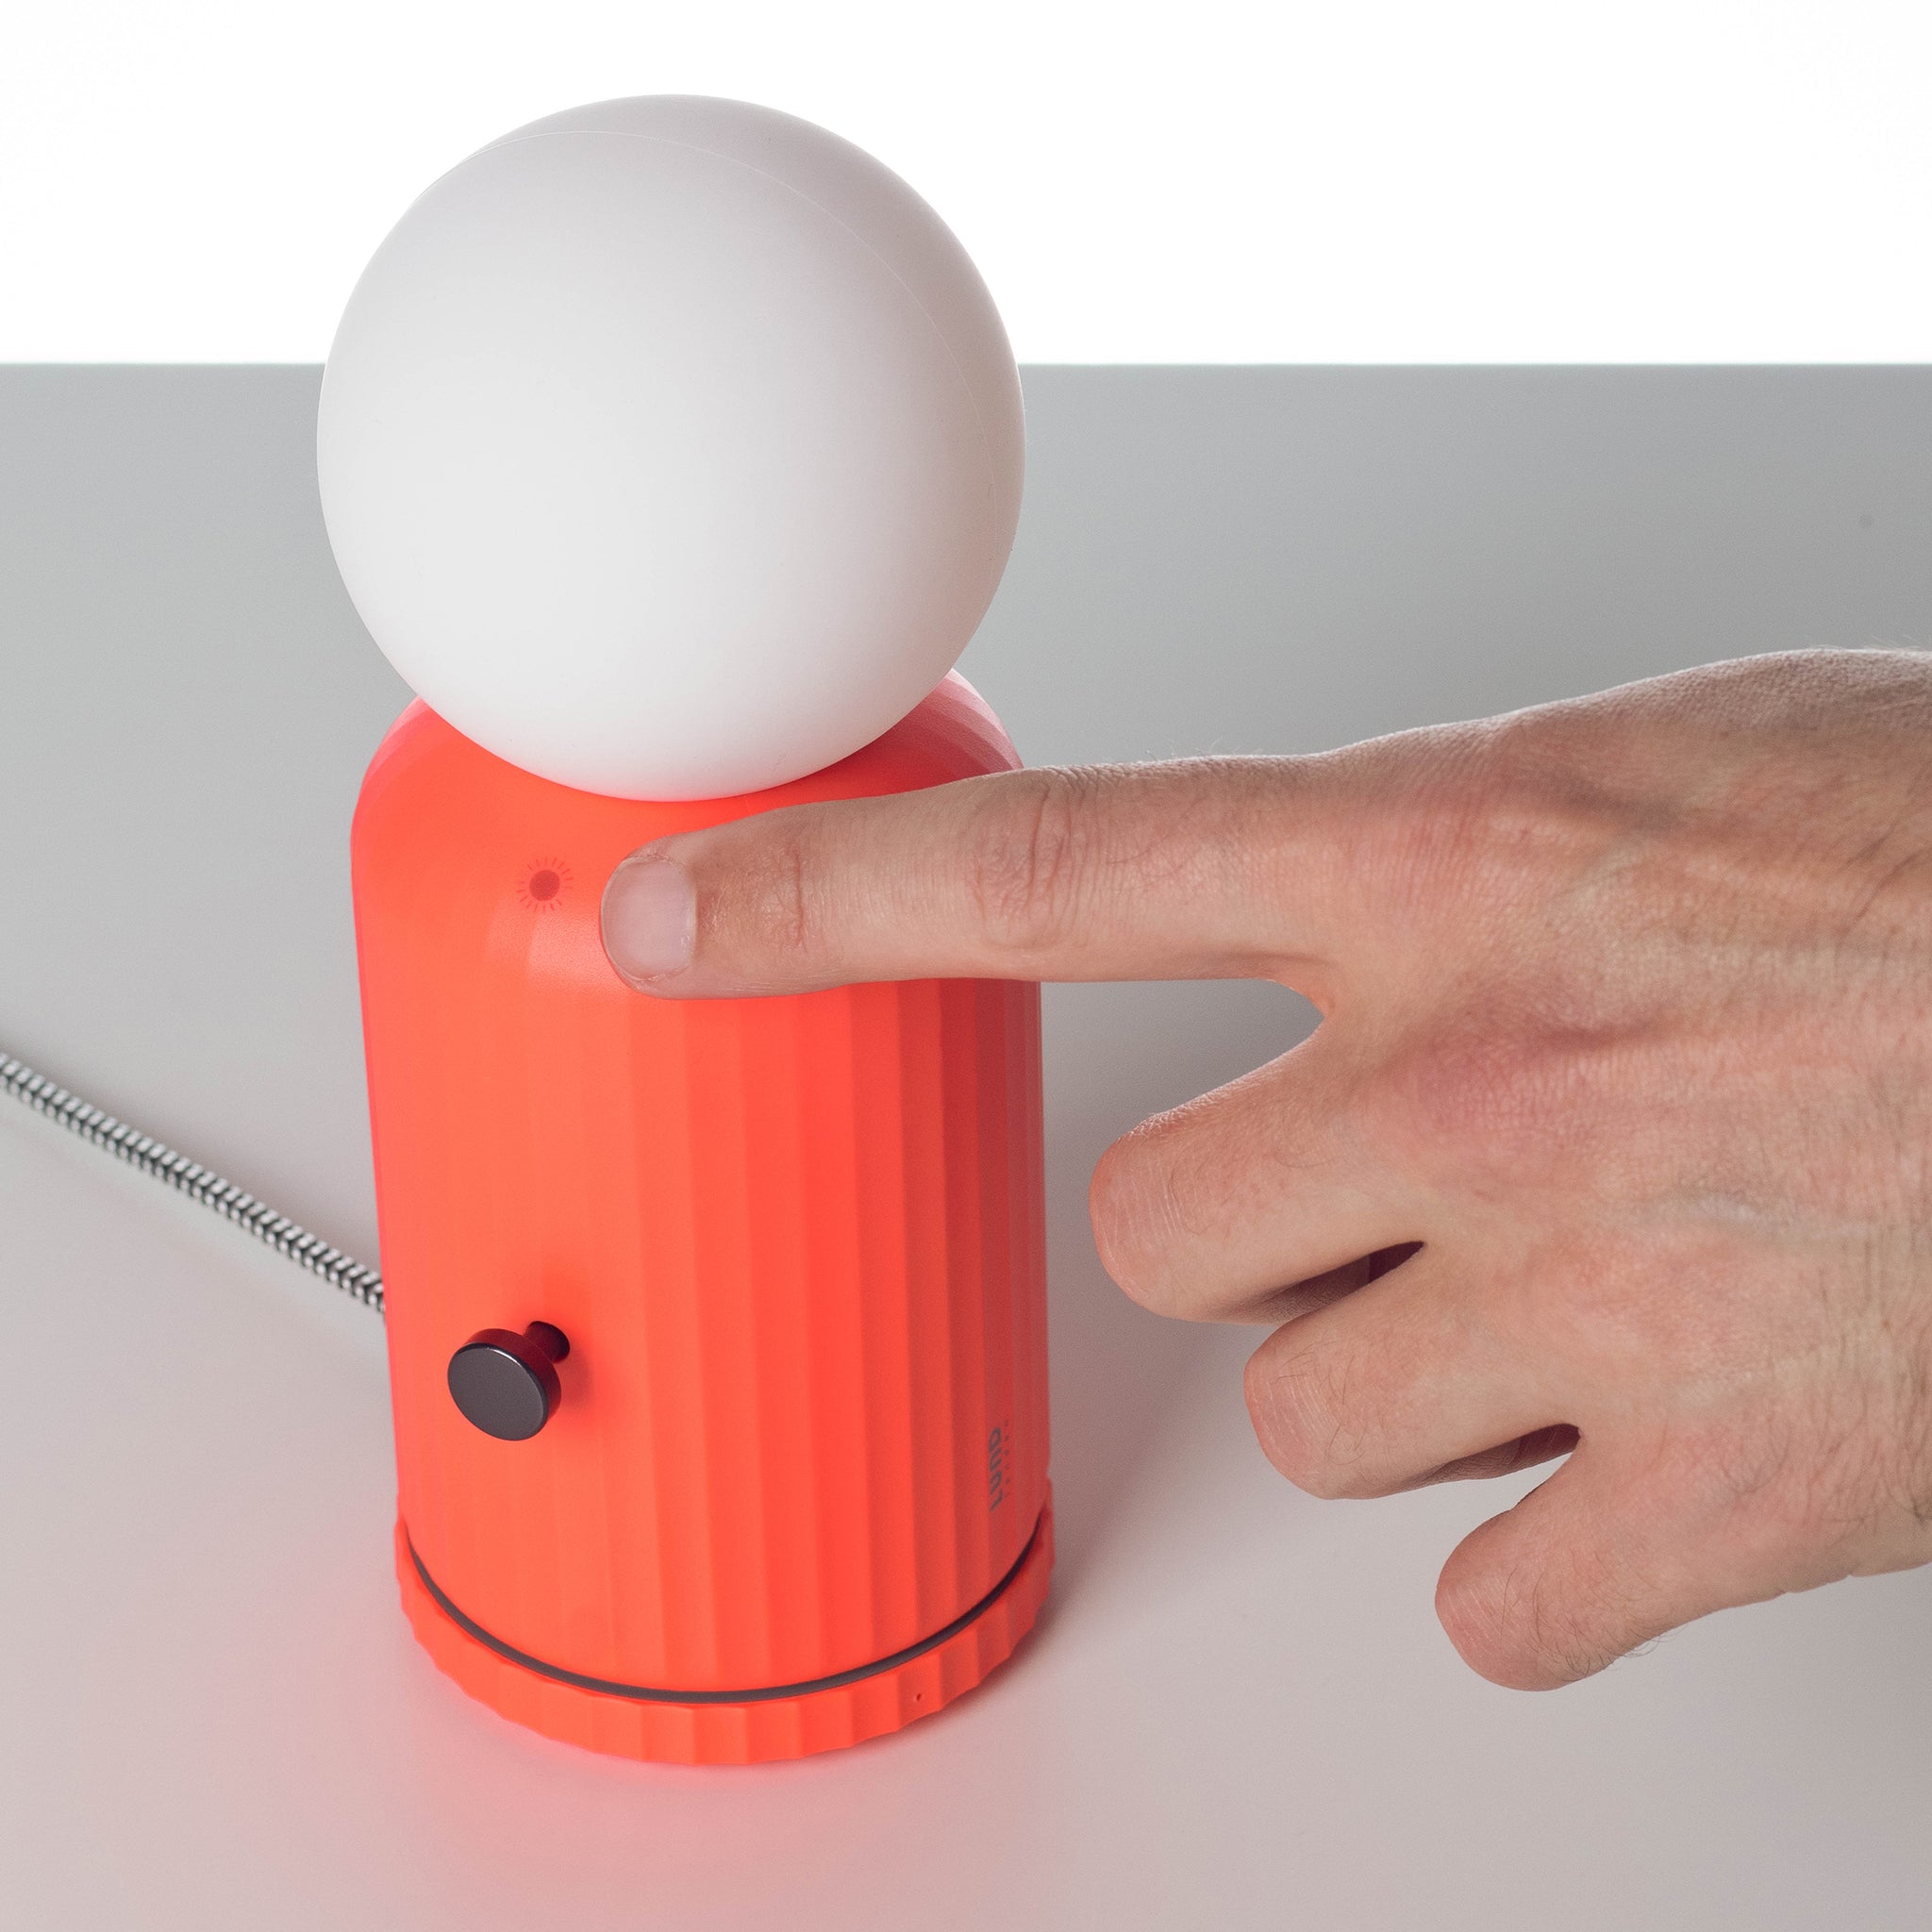 Skittle Oplaadbare Lamp Coral│Lund London│Draadloos│foto met hand aan touchknop